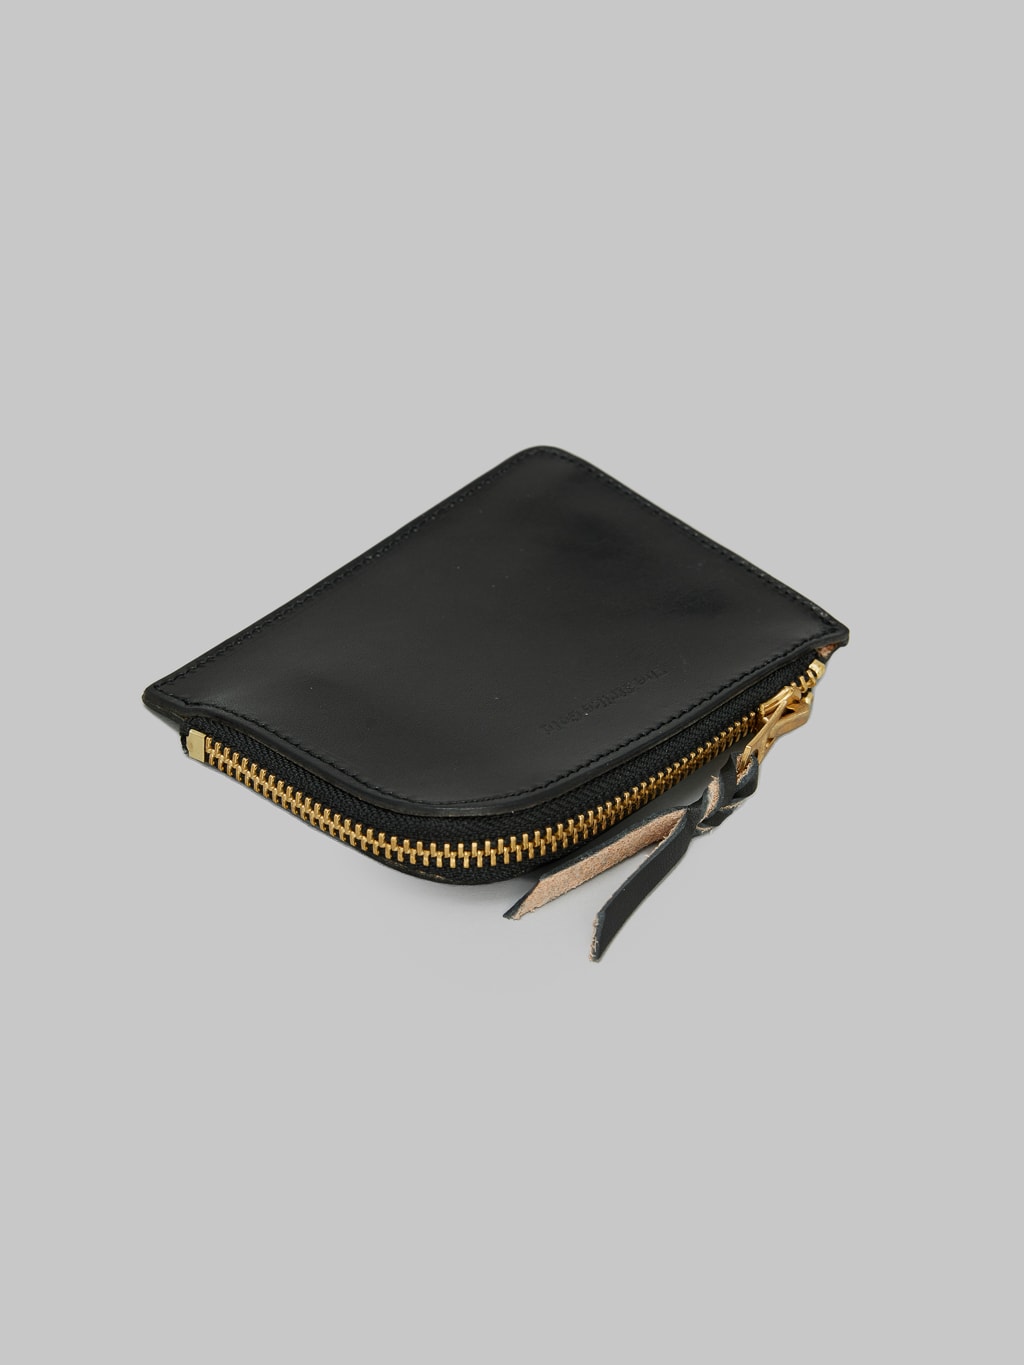 The Strike Gold Leather Zip Wallet Black side detail